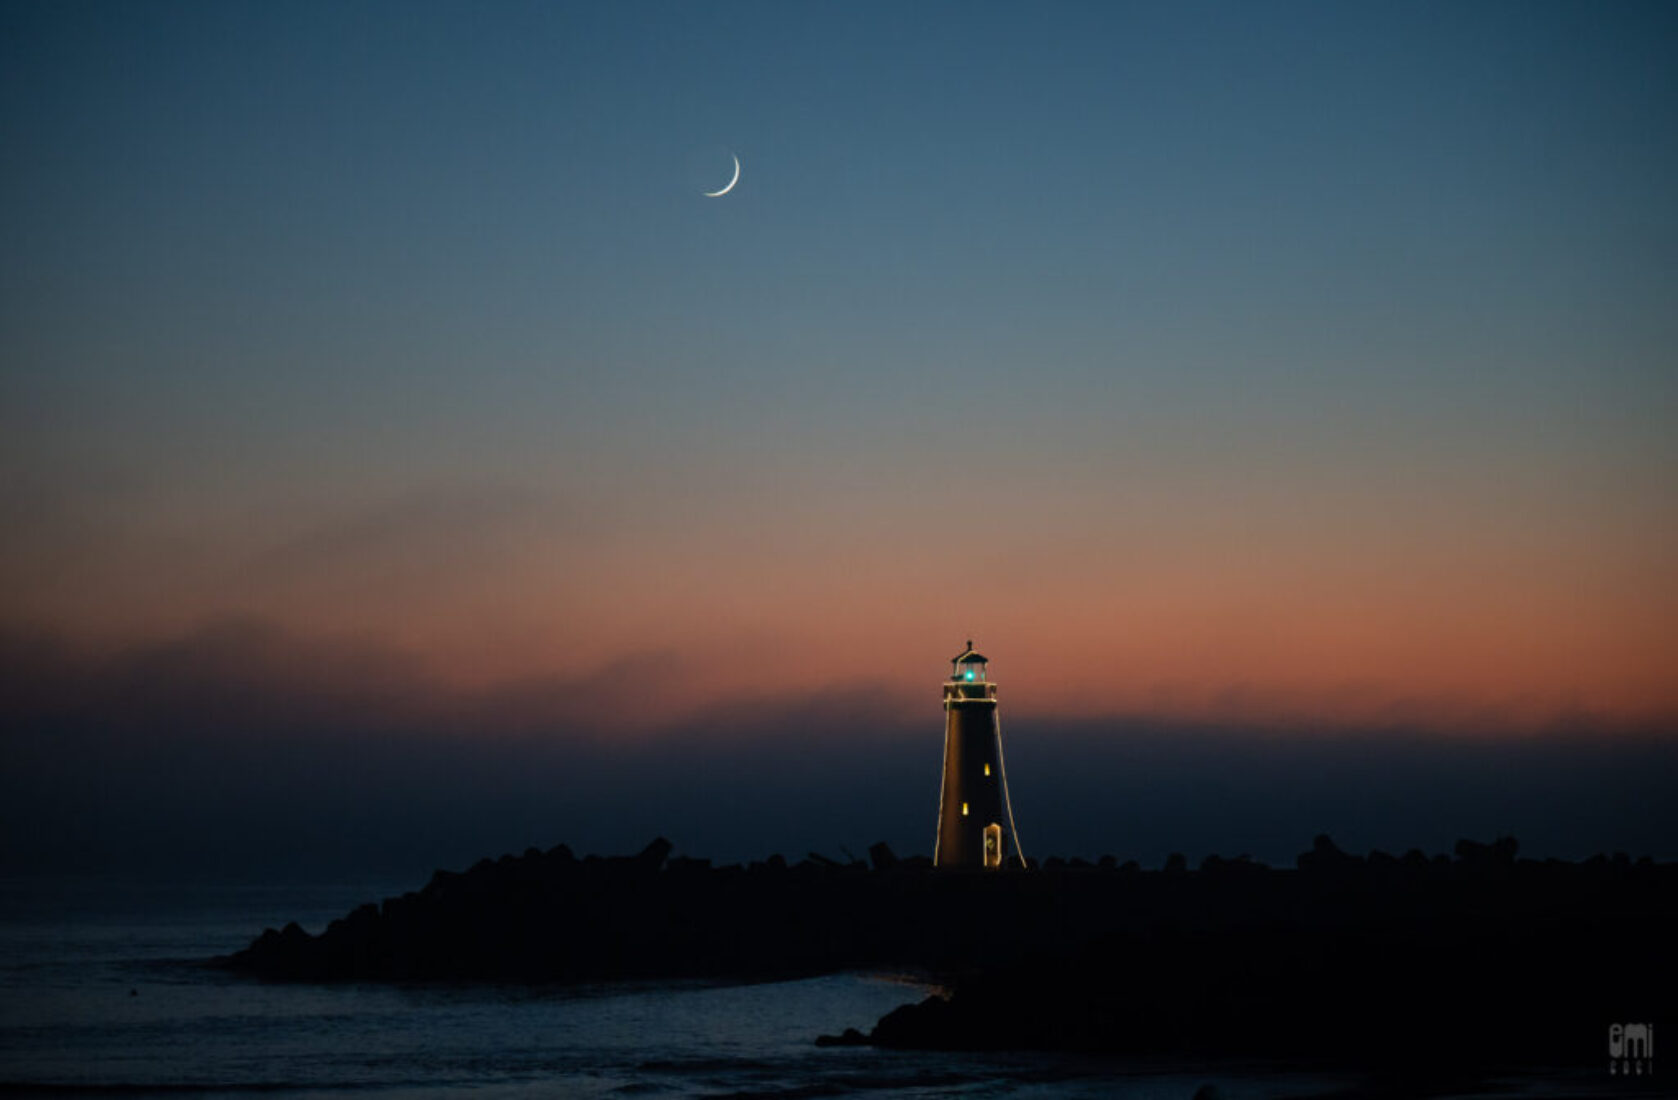 20211205 Moon Walton Lighthouse Santa Cruz photo by emi